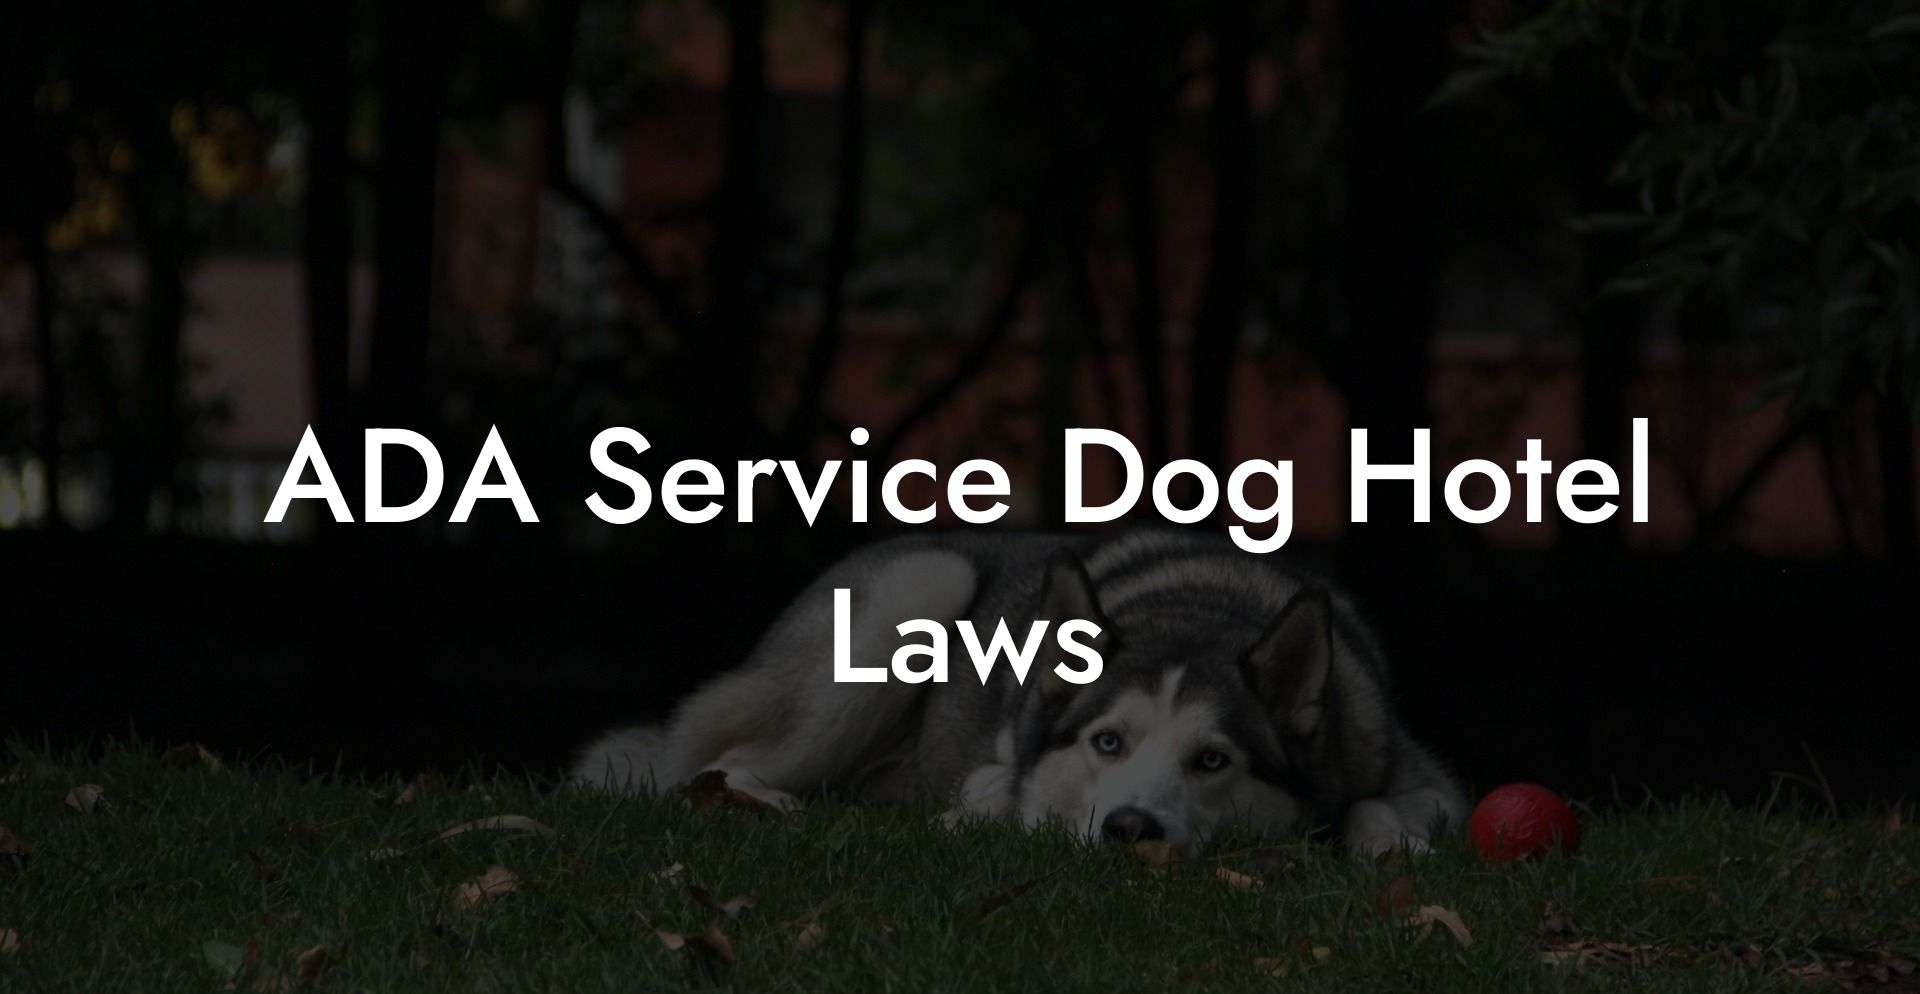 ADA Service Dog Hotel Laws